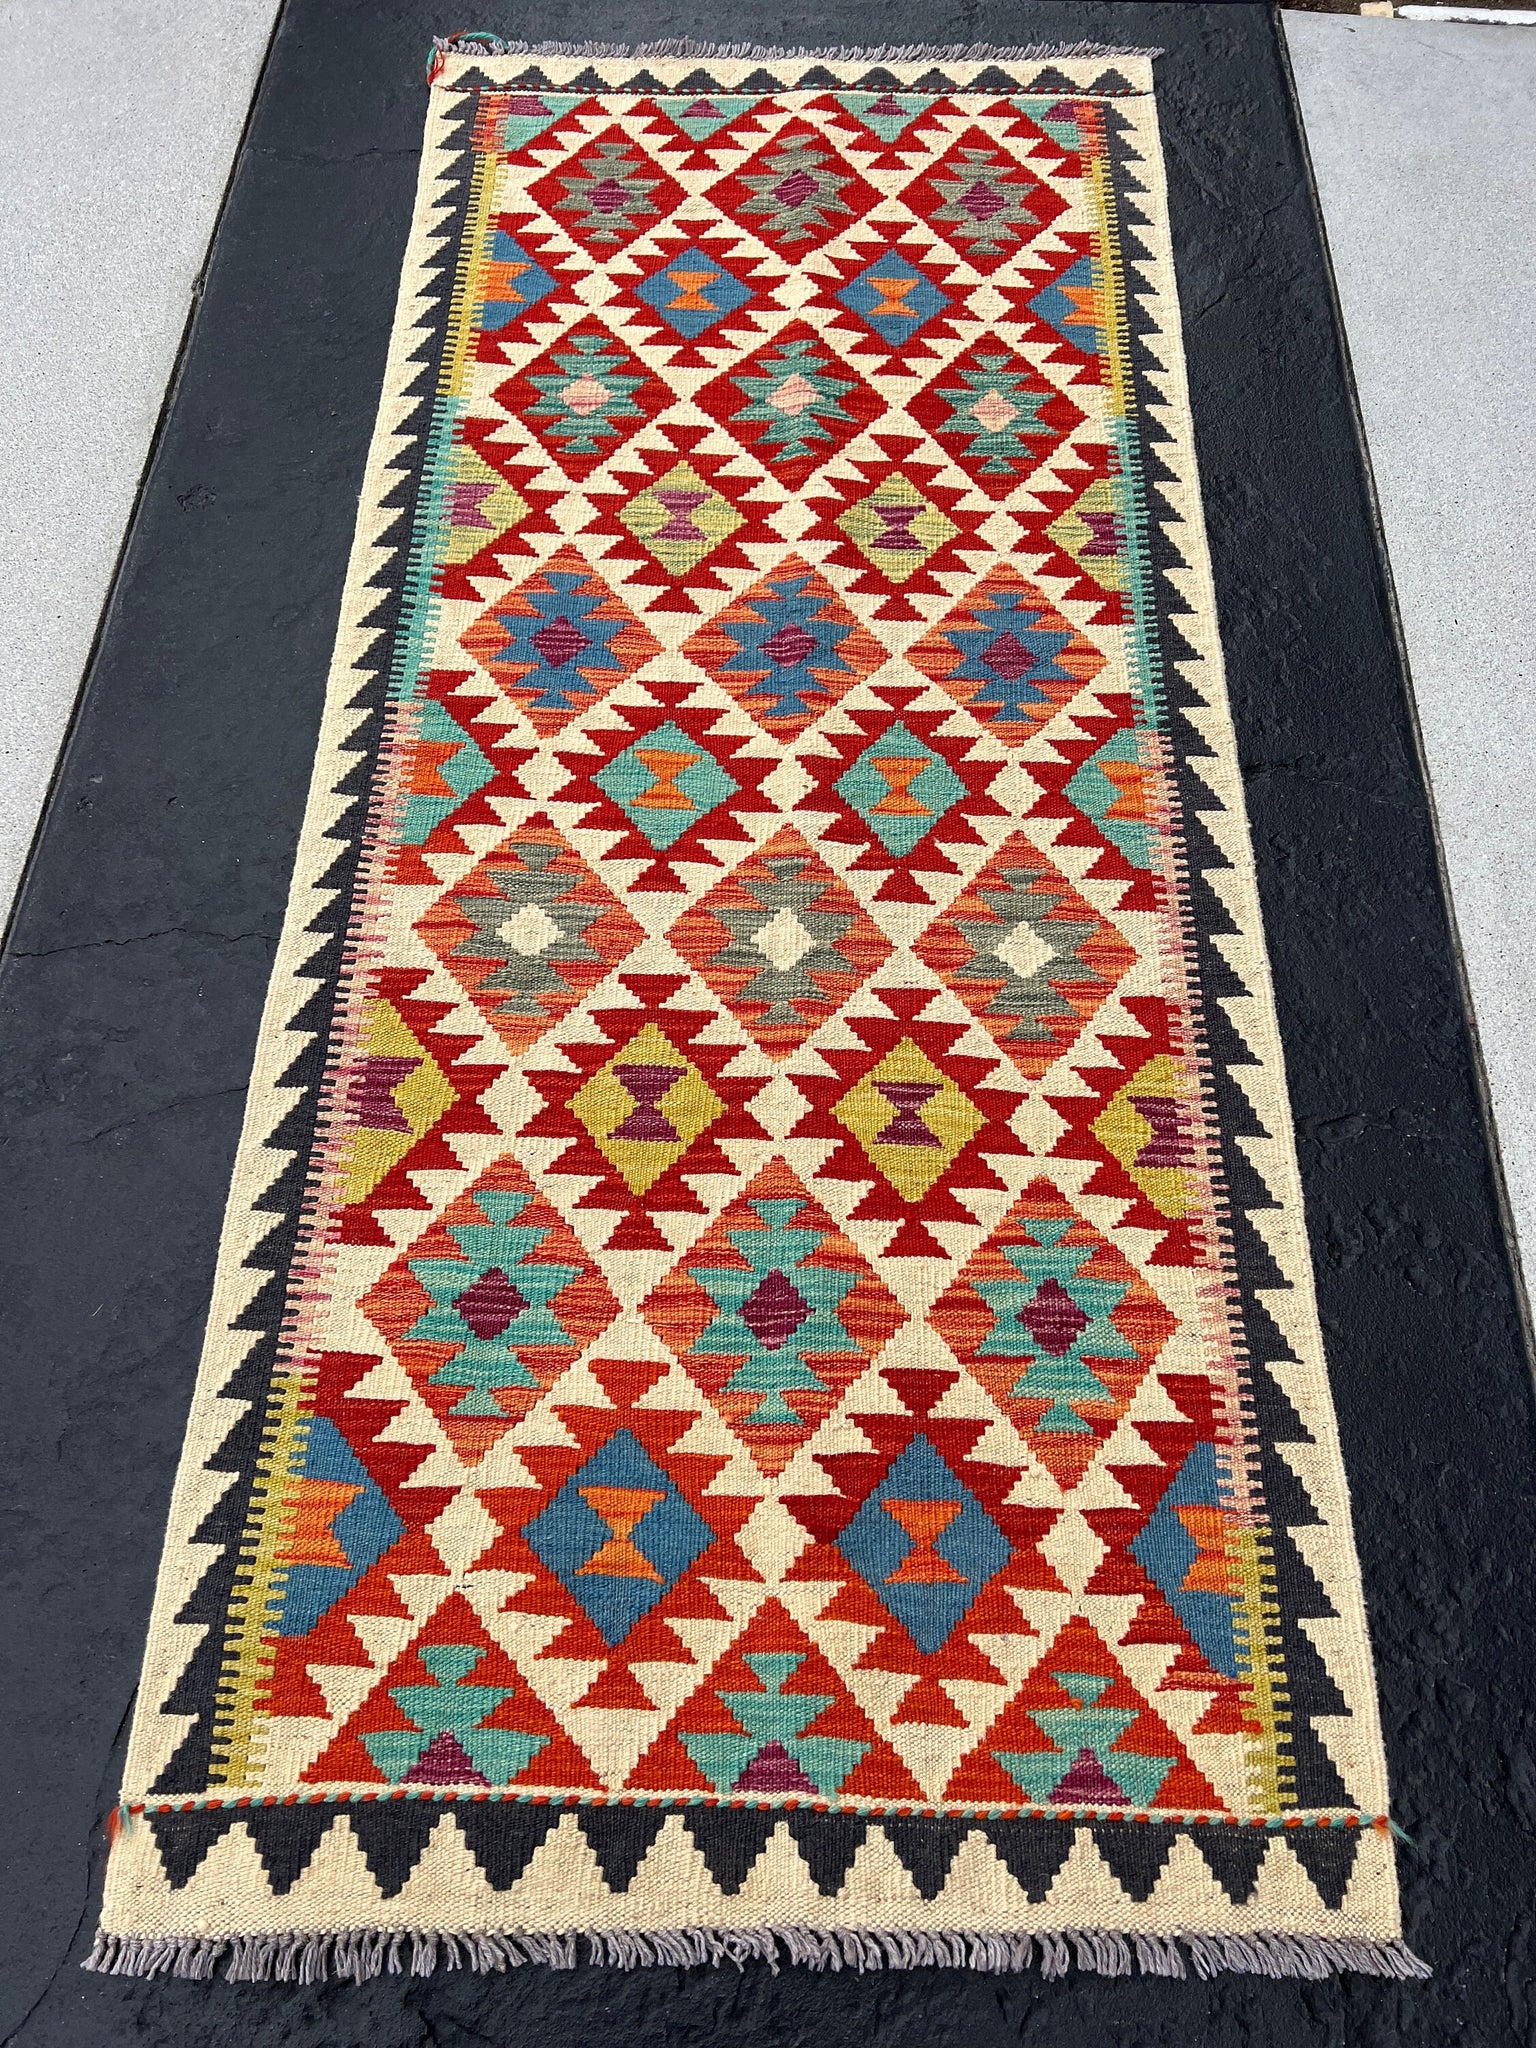 3x7 (100x200) Handmade Afghan Kilim Runner Rug | Cream Black Grey Burnt Orange Blood Red Navy Blue Olive Teal Turquoise Purple | Persian